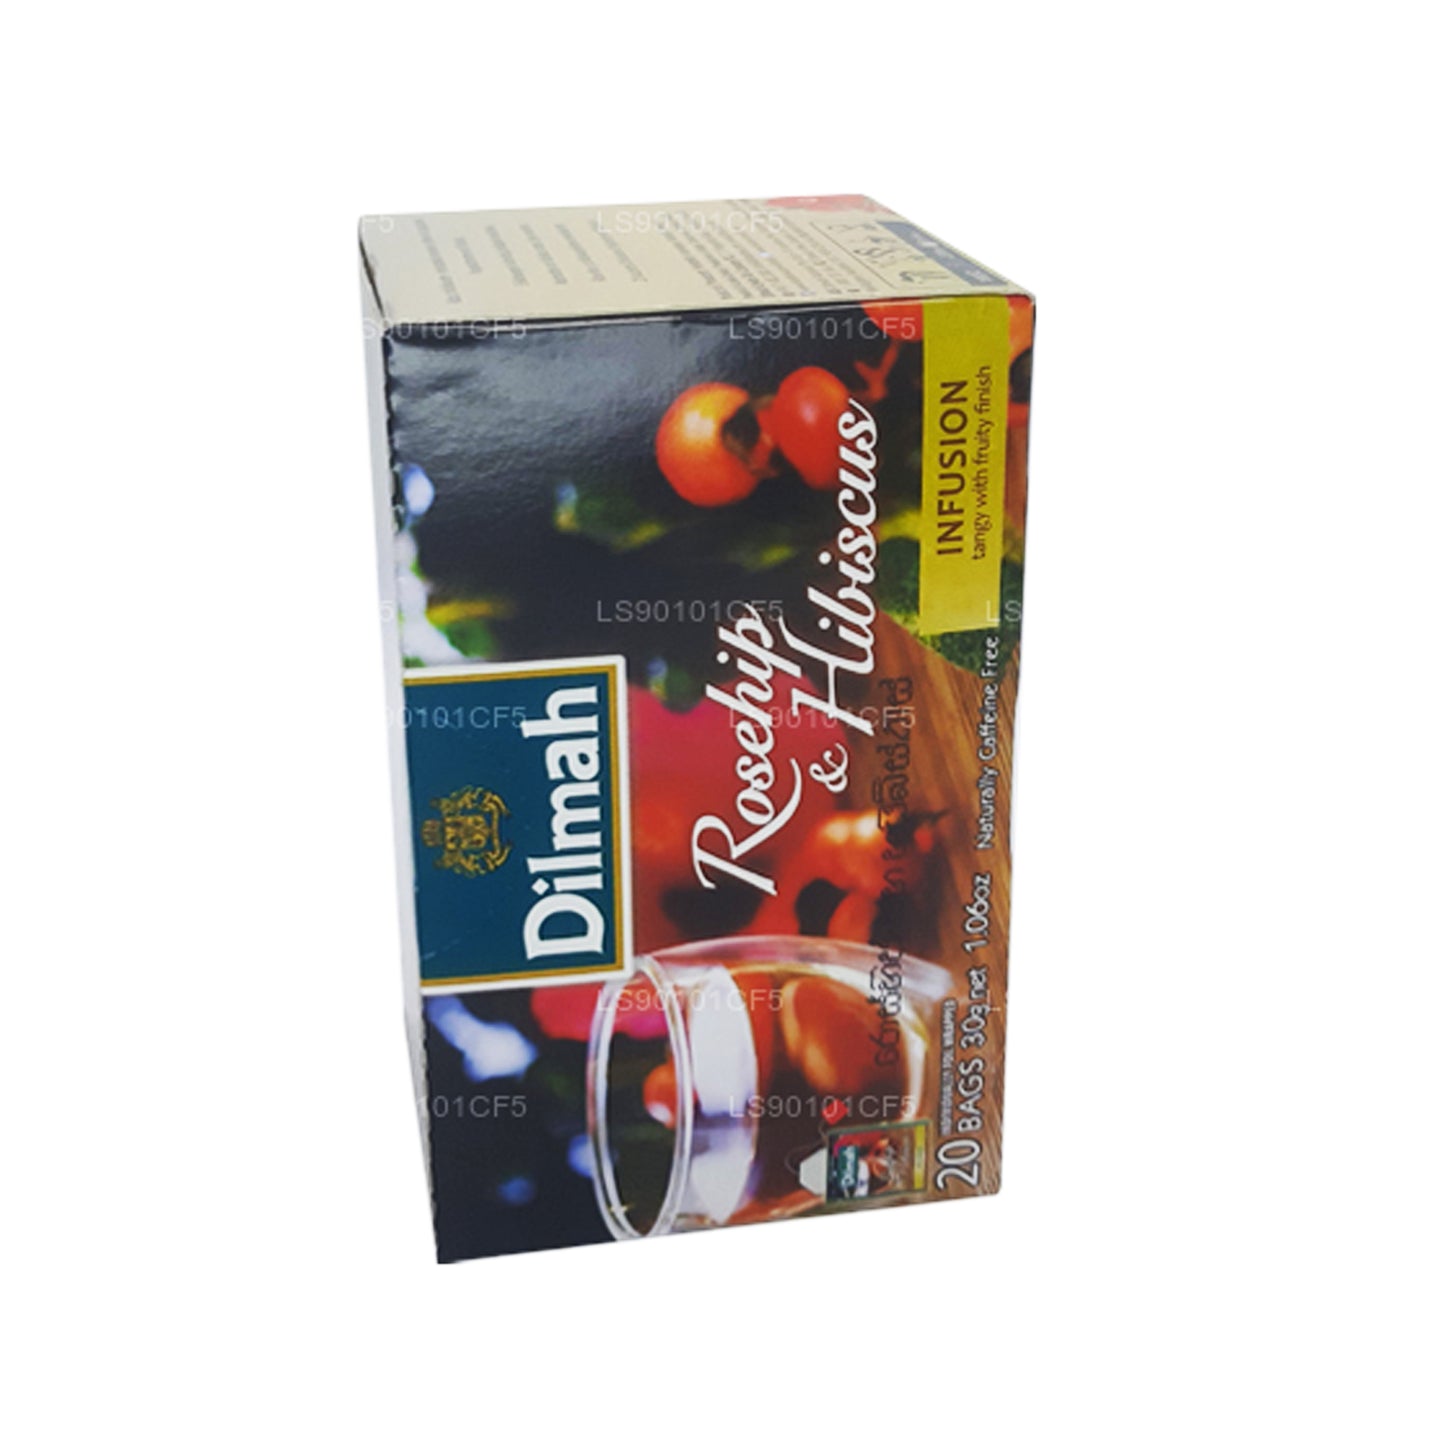 Dilmah 玫瑰果和芙蓉味红茶 (30 克)